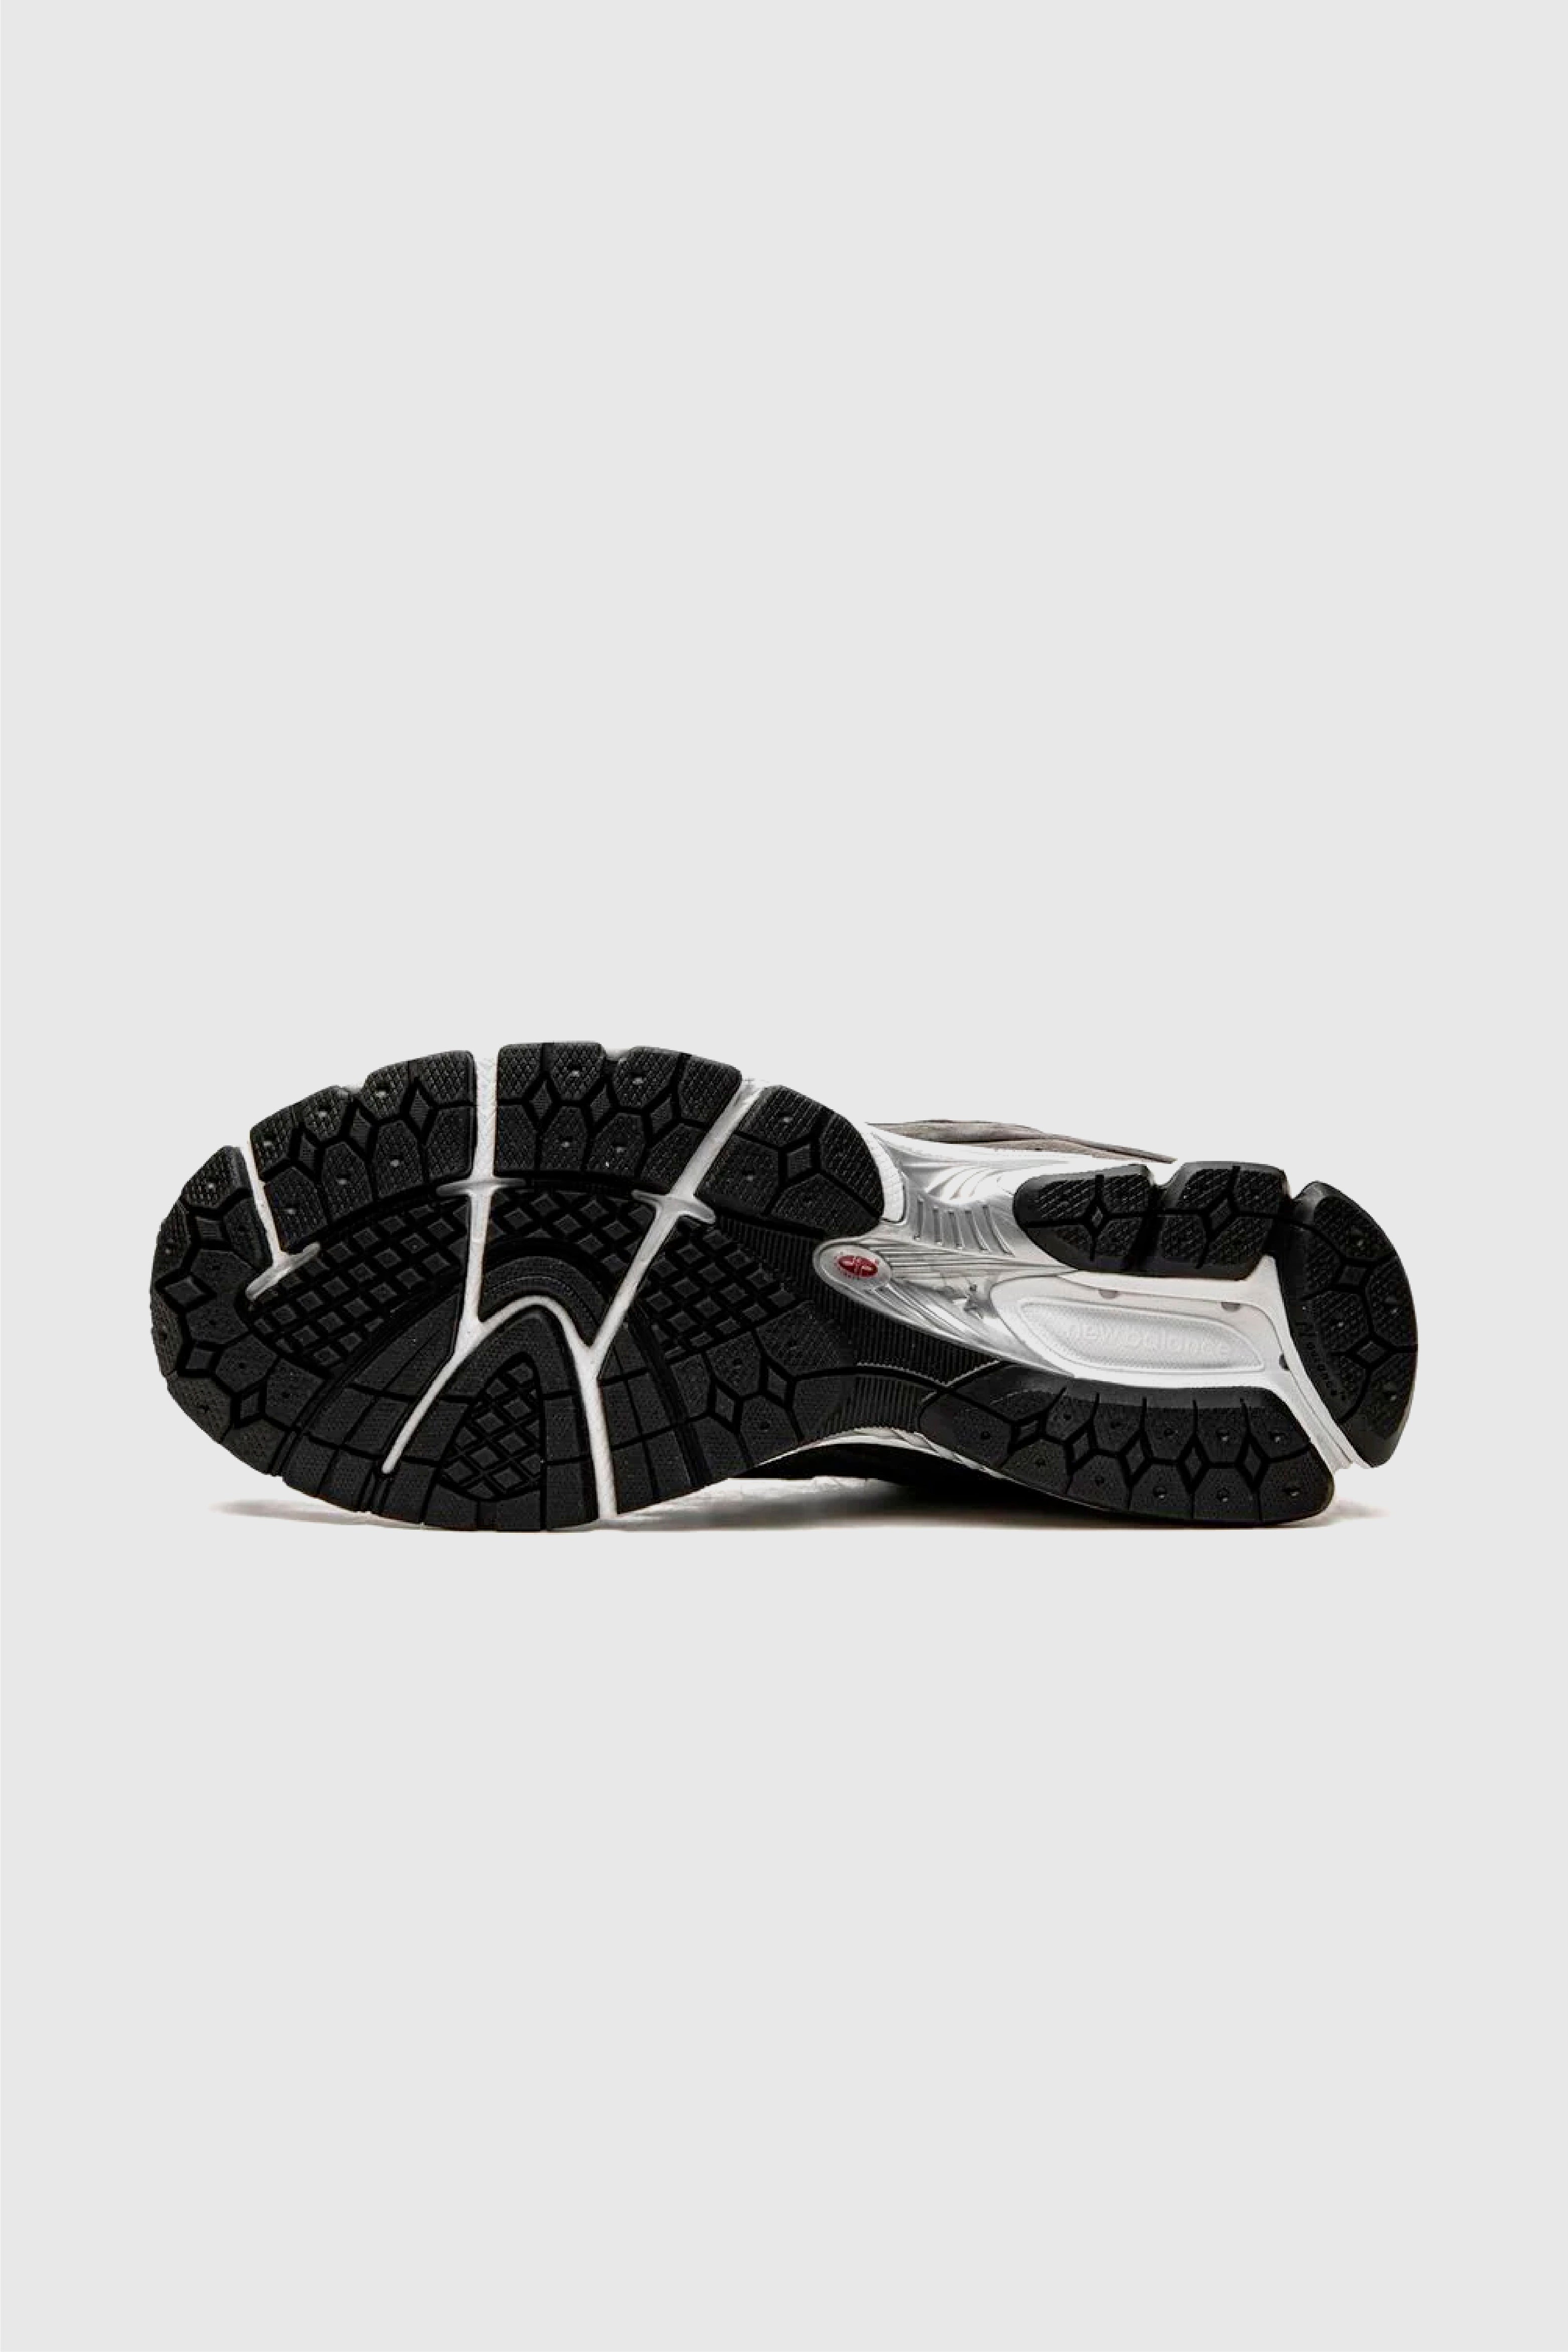 Selectshop FRAME - NEW BALANCE 2002R OG "Dark Grey" Footwear Concept Store Dubai